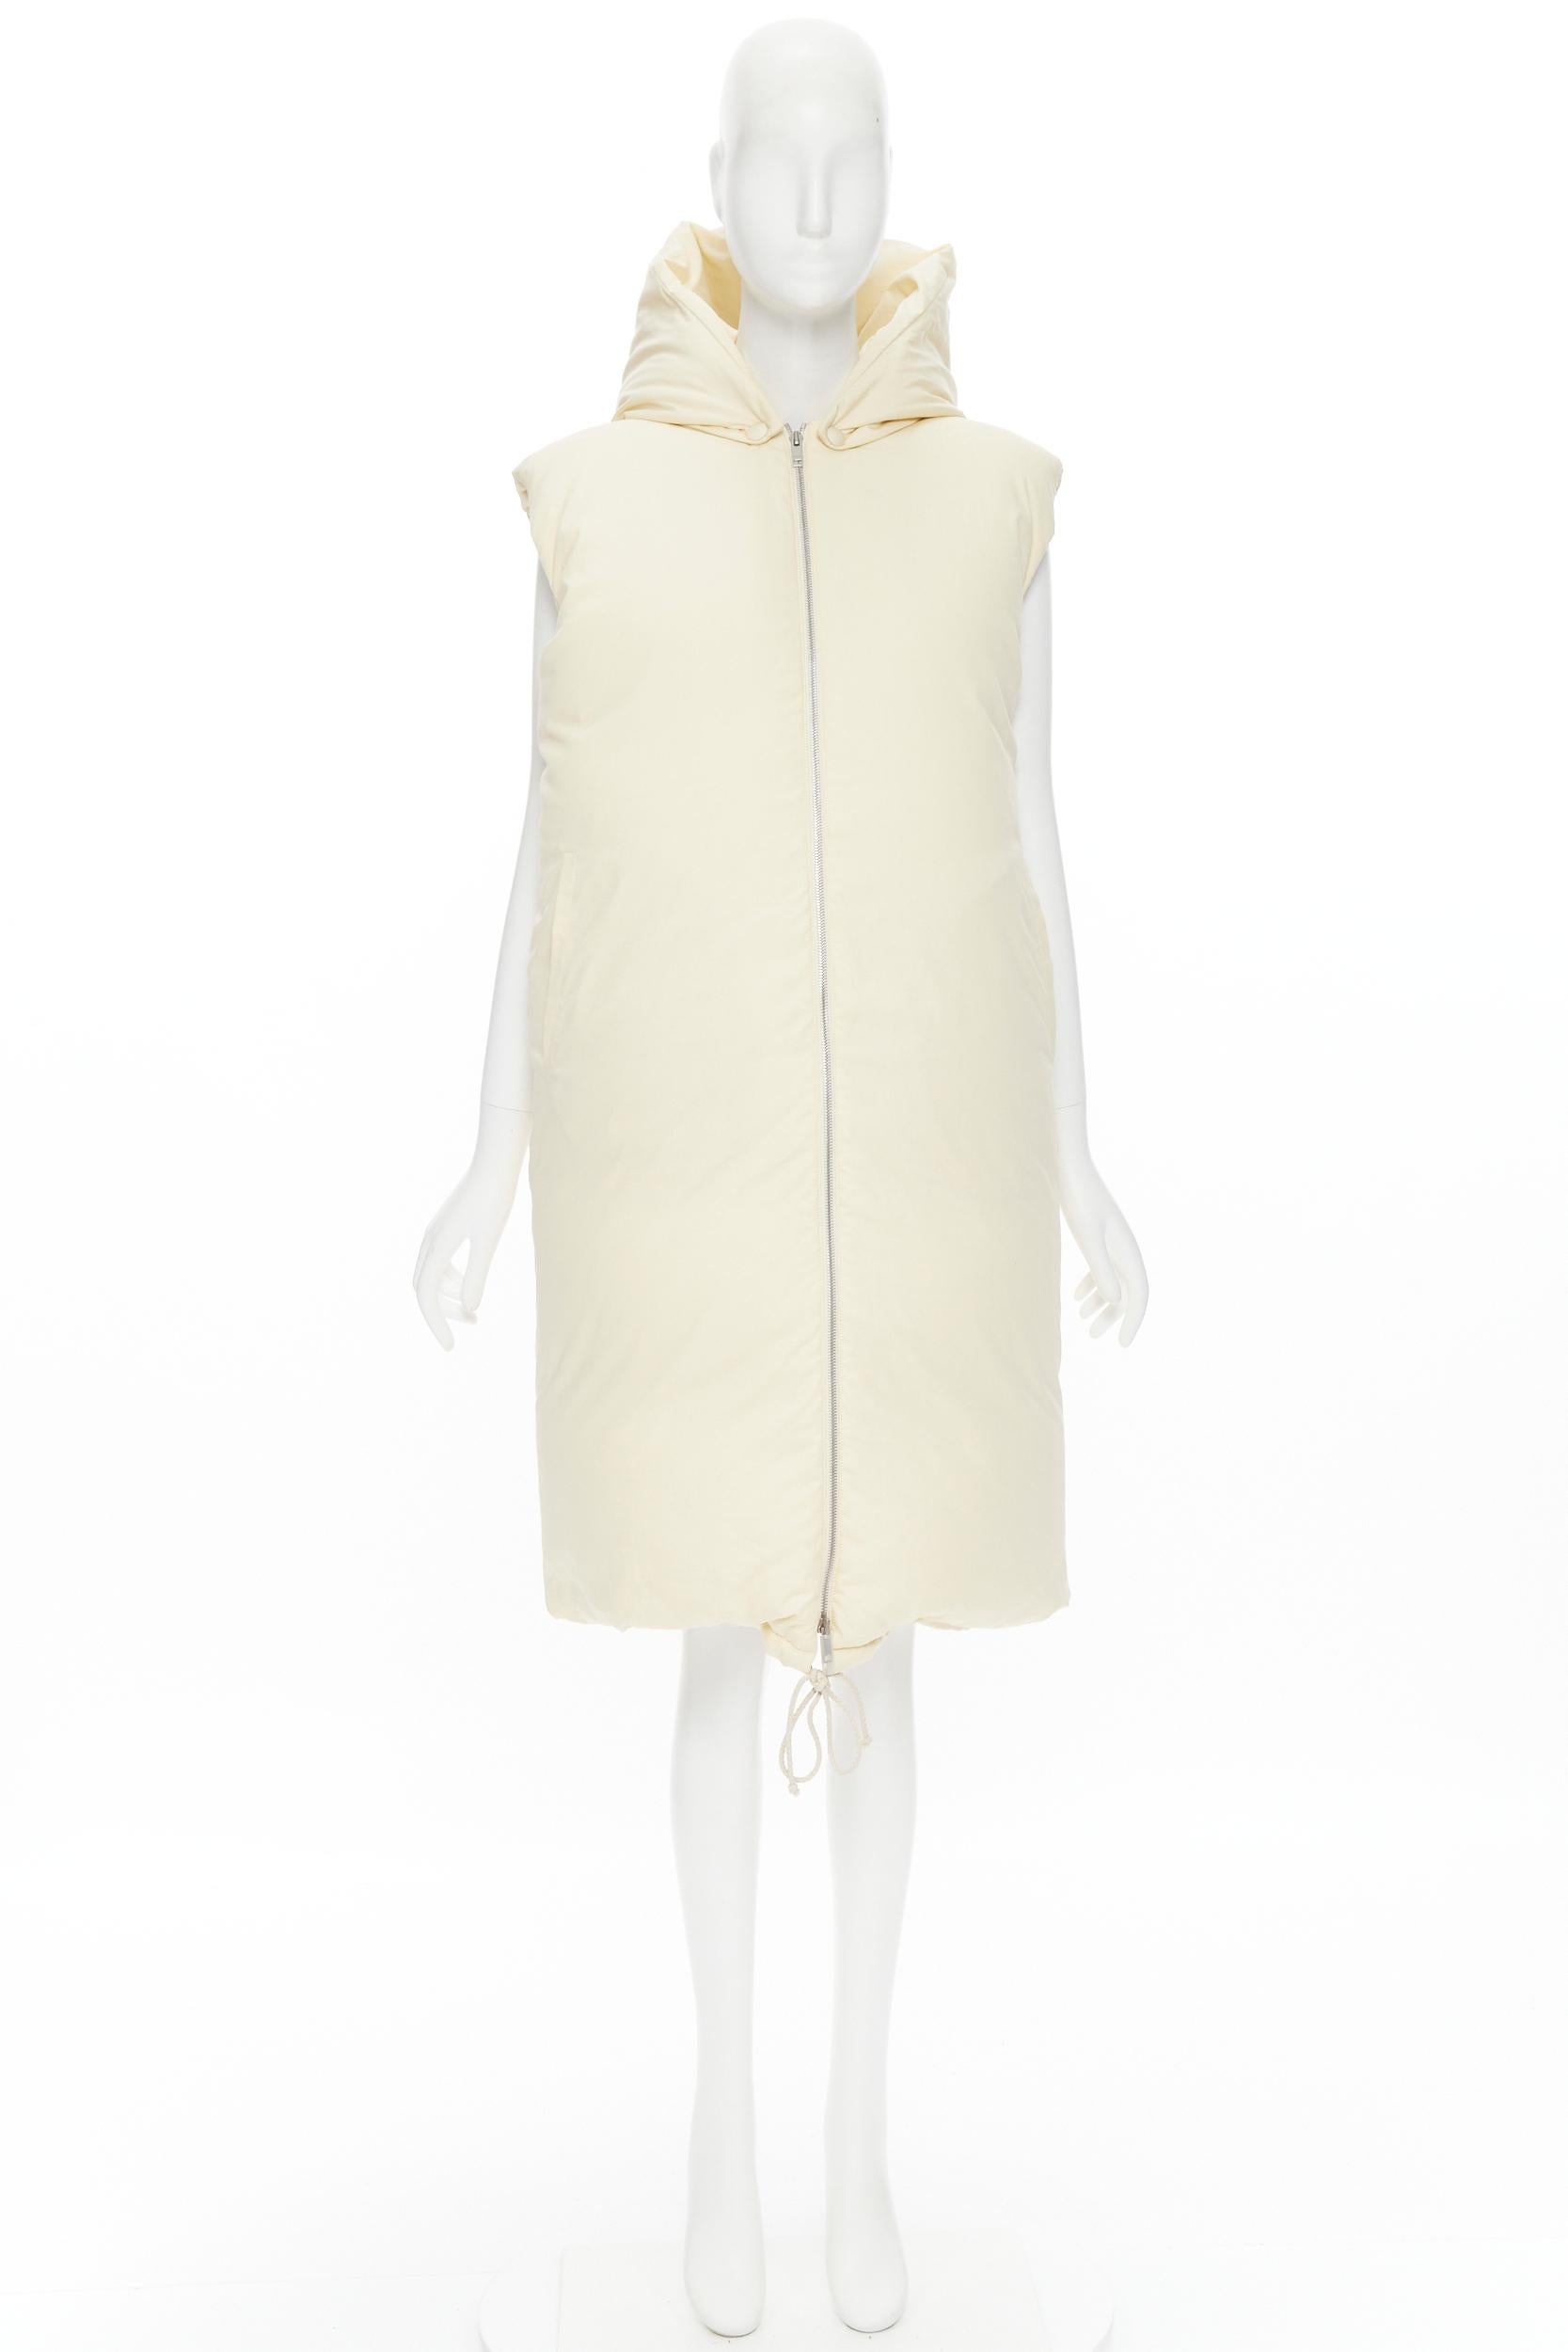 new OLD CELINE Phoebe Philo 2018 down filled hooded puffer coat vest FR36 S 5